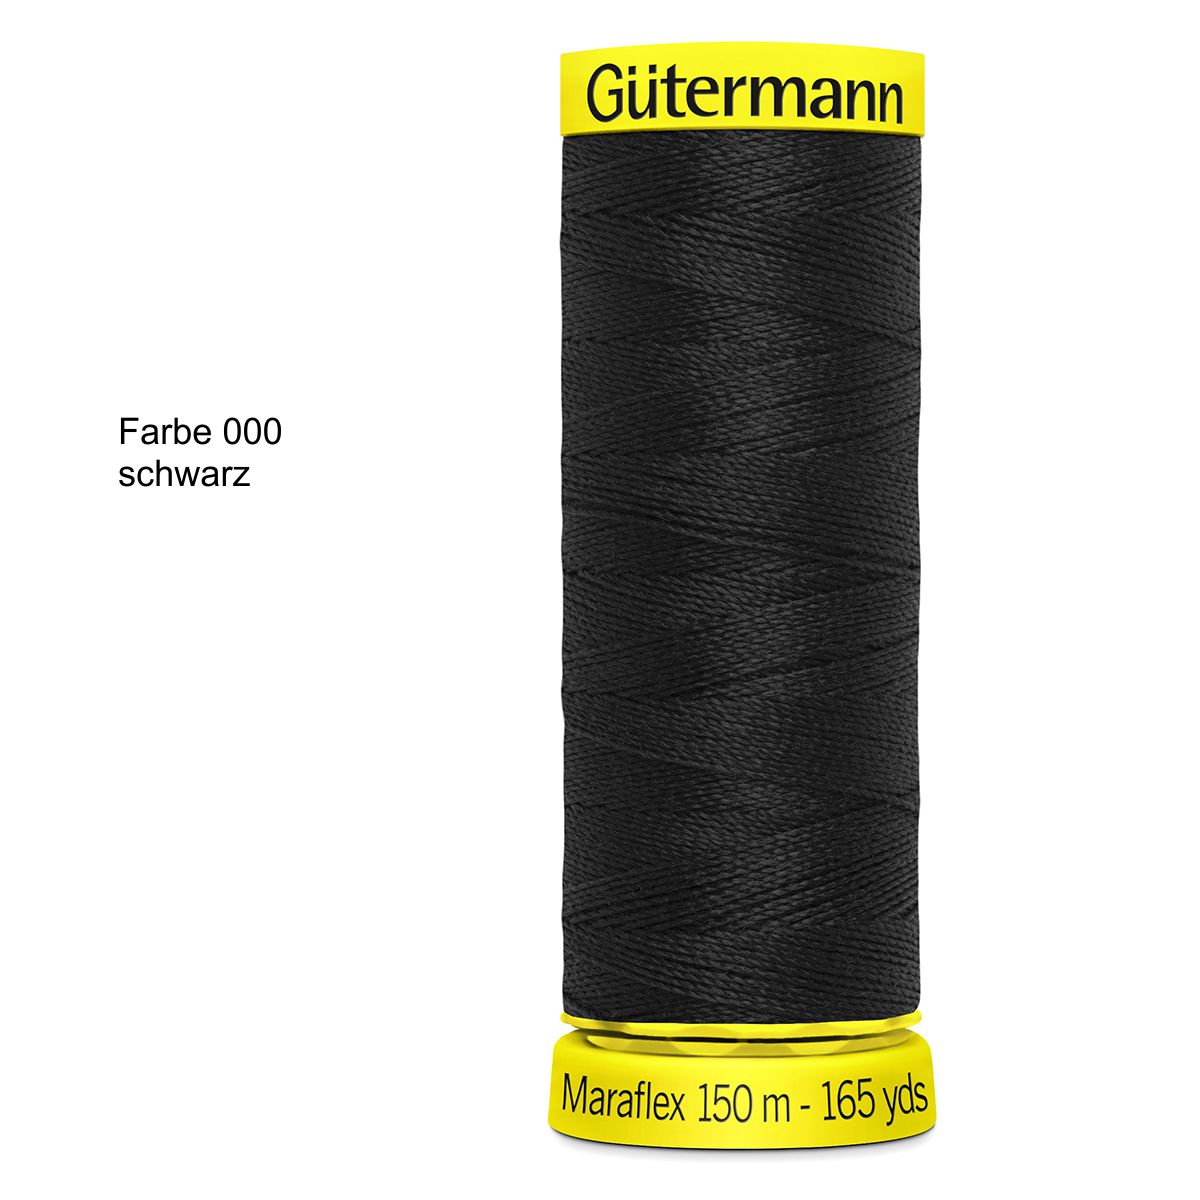 Gütermann Maraflex Elastic- Nähgarn 150m Farbe 000 schwarz